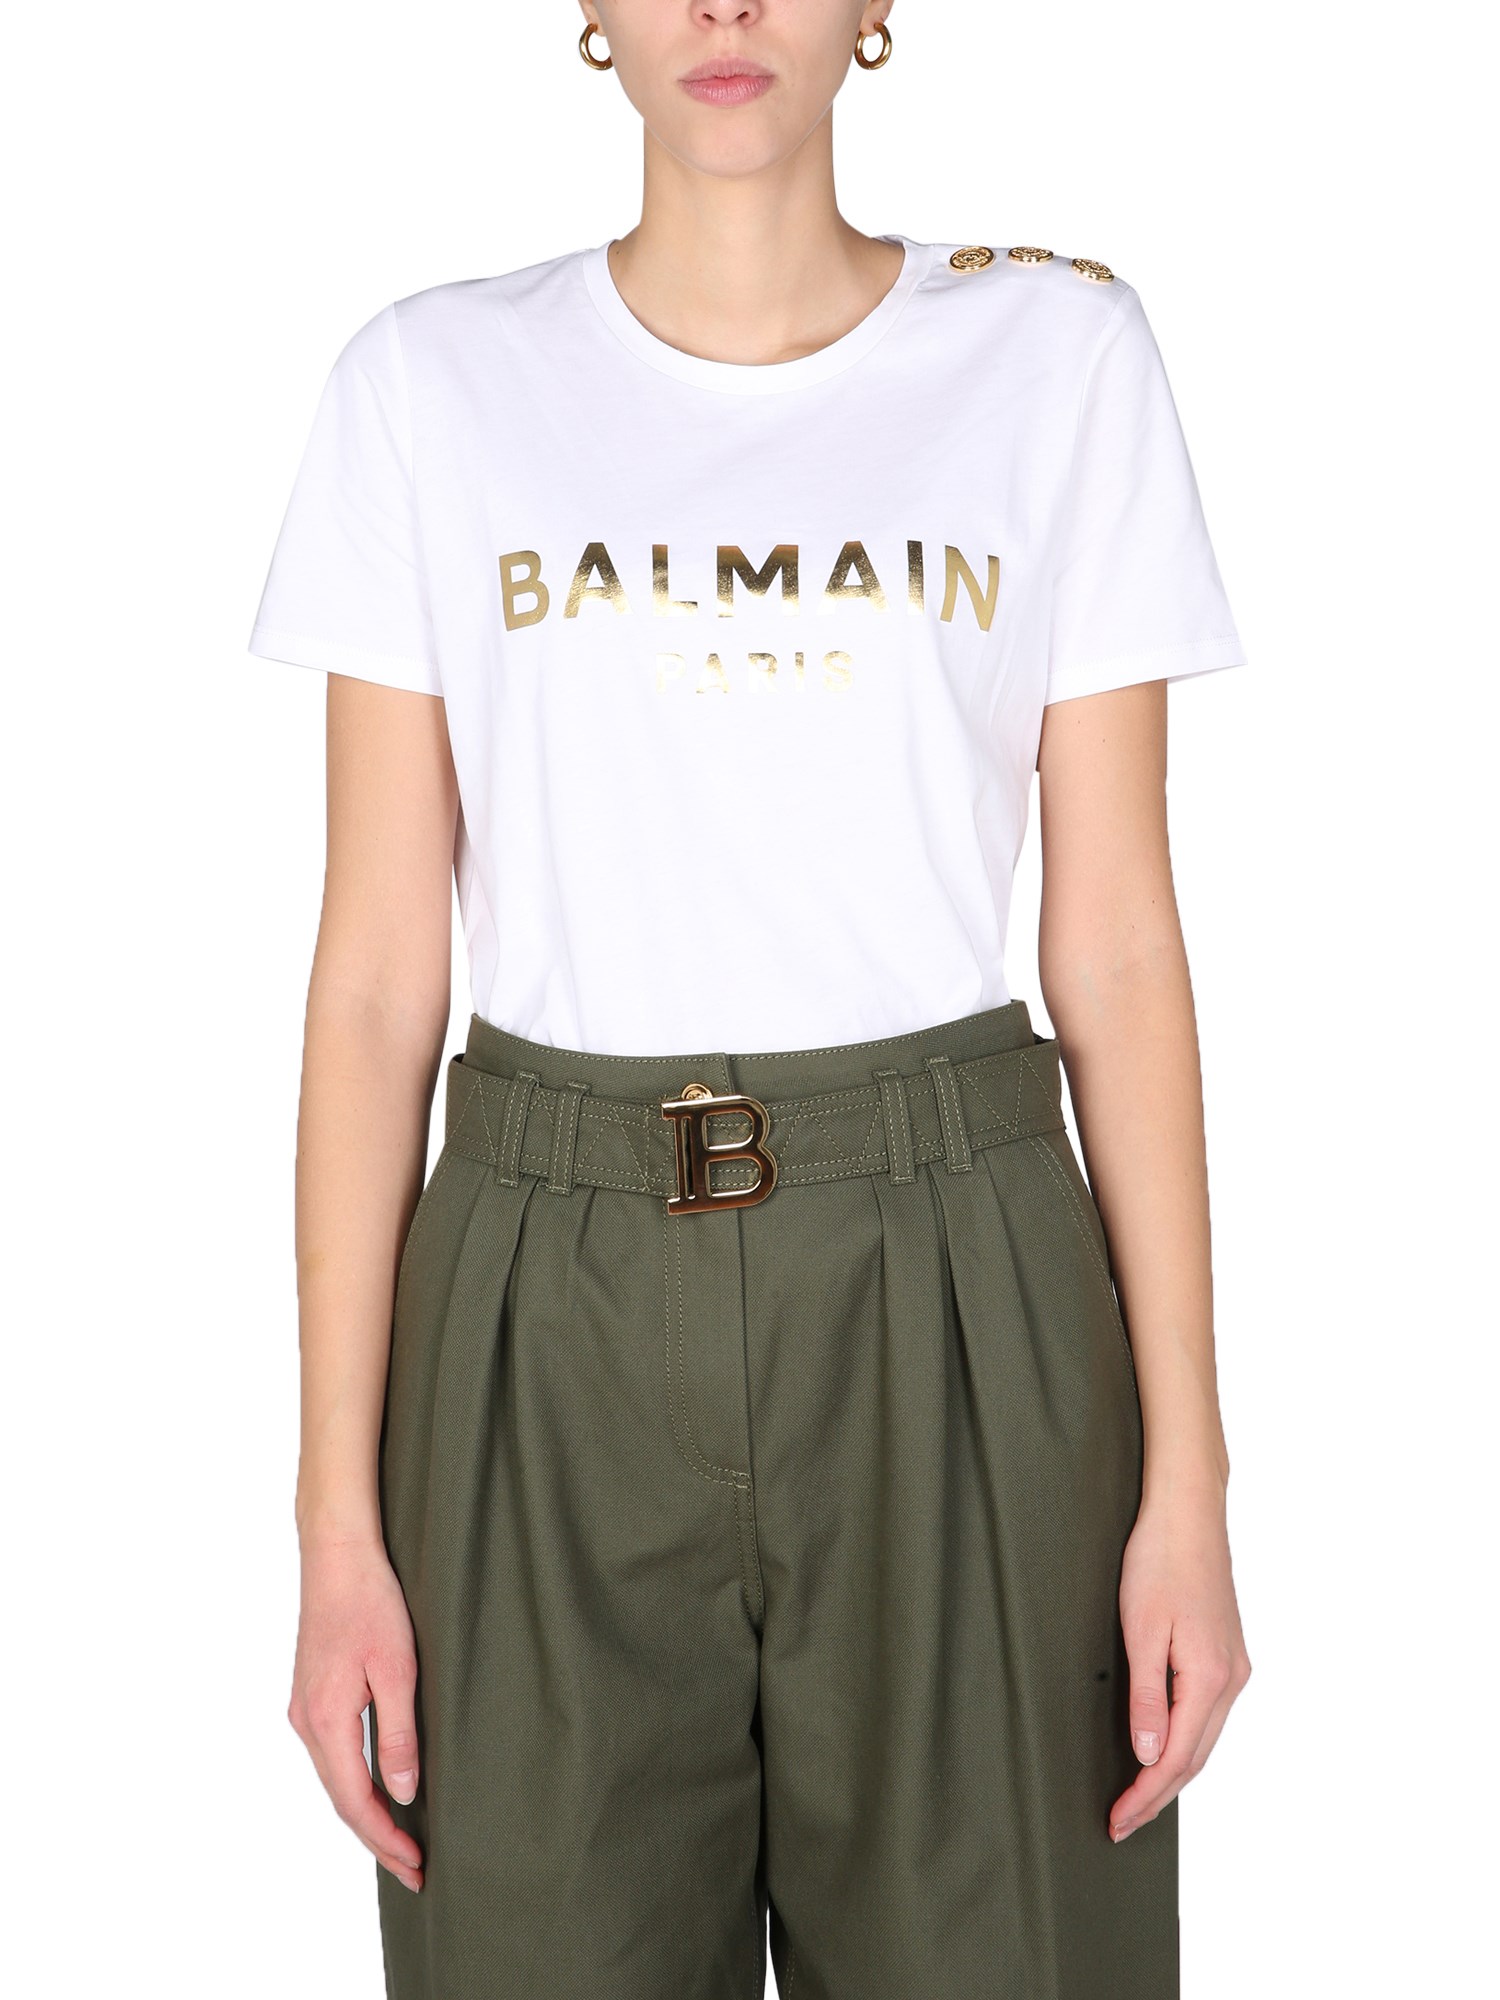 balmain t-shirt with laminated logo print